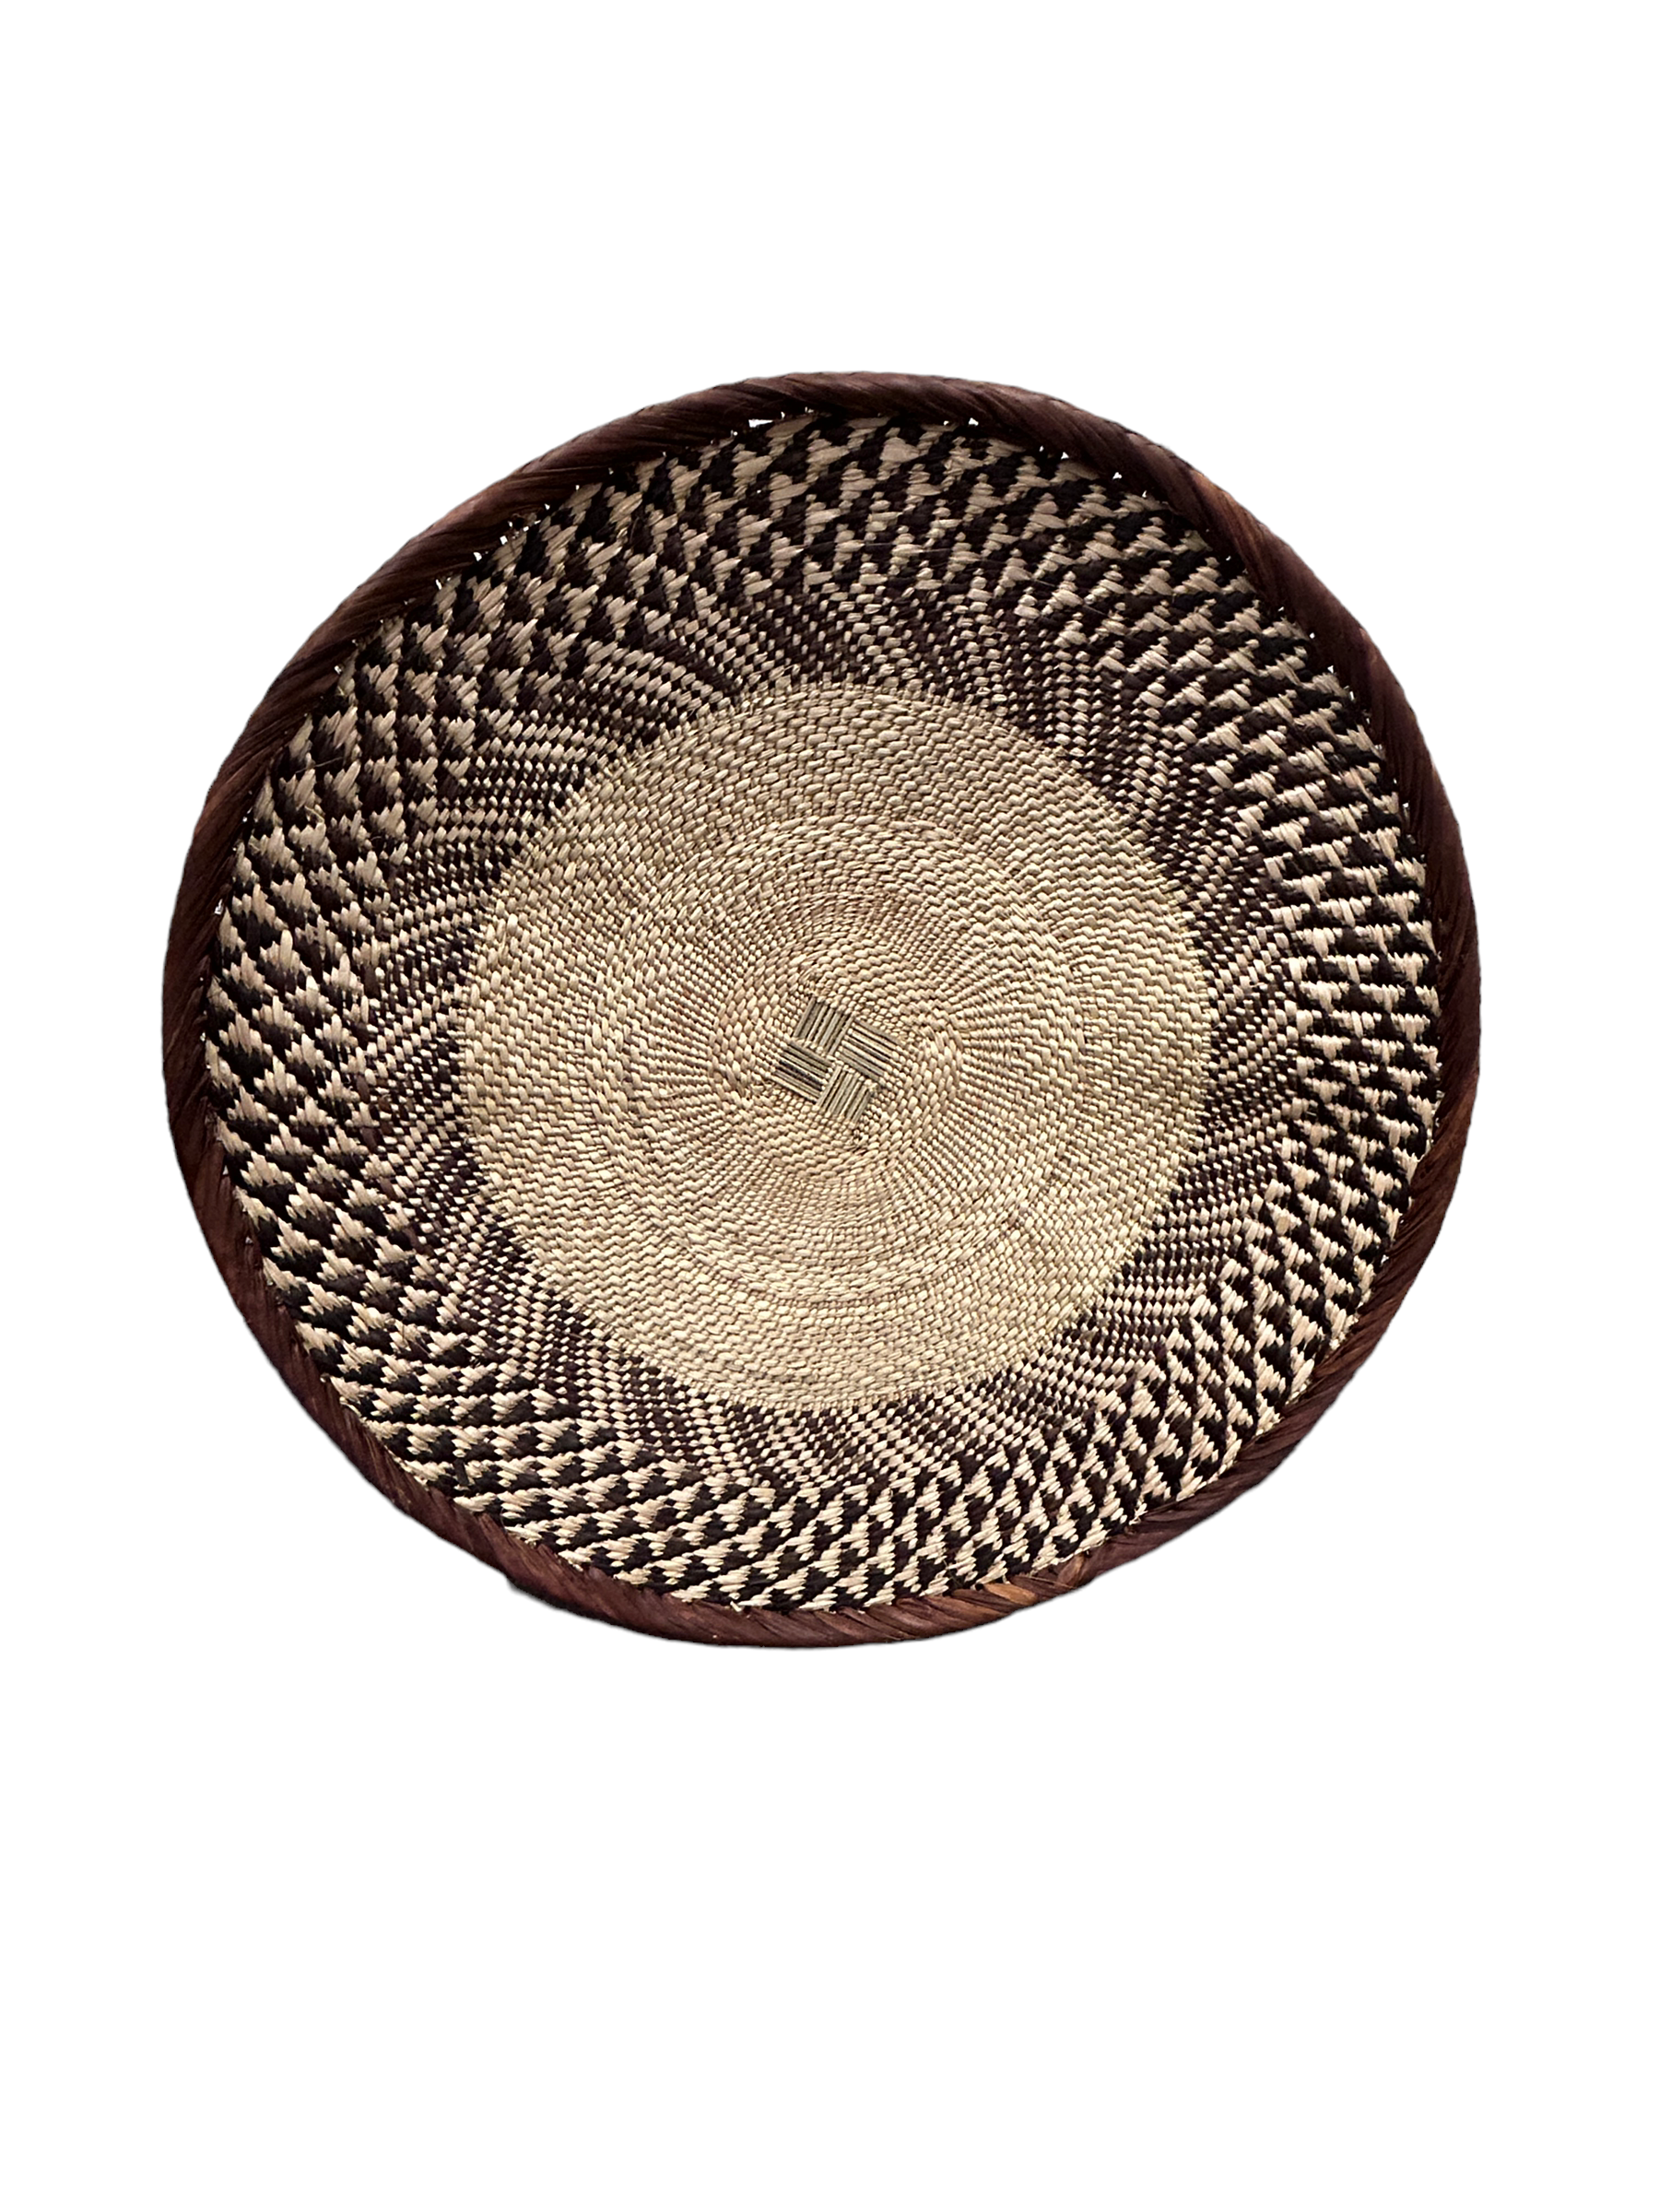 botanicalboysuk Tonga Basket Natural (45-26)